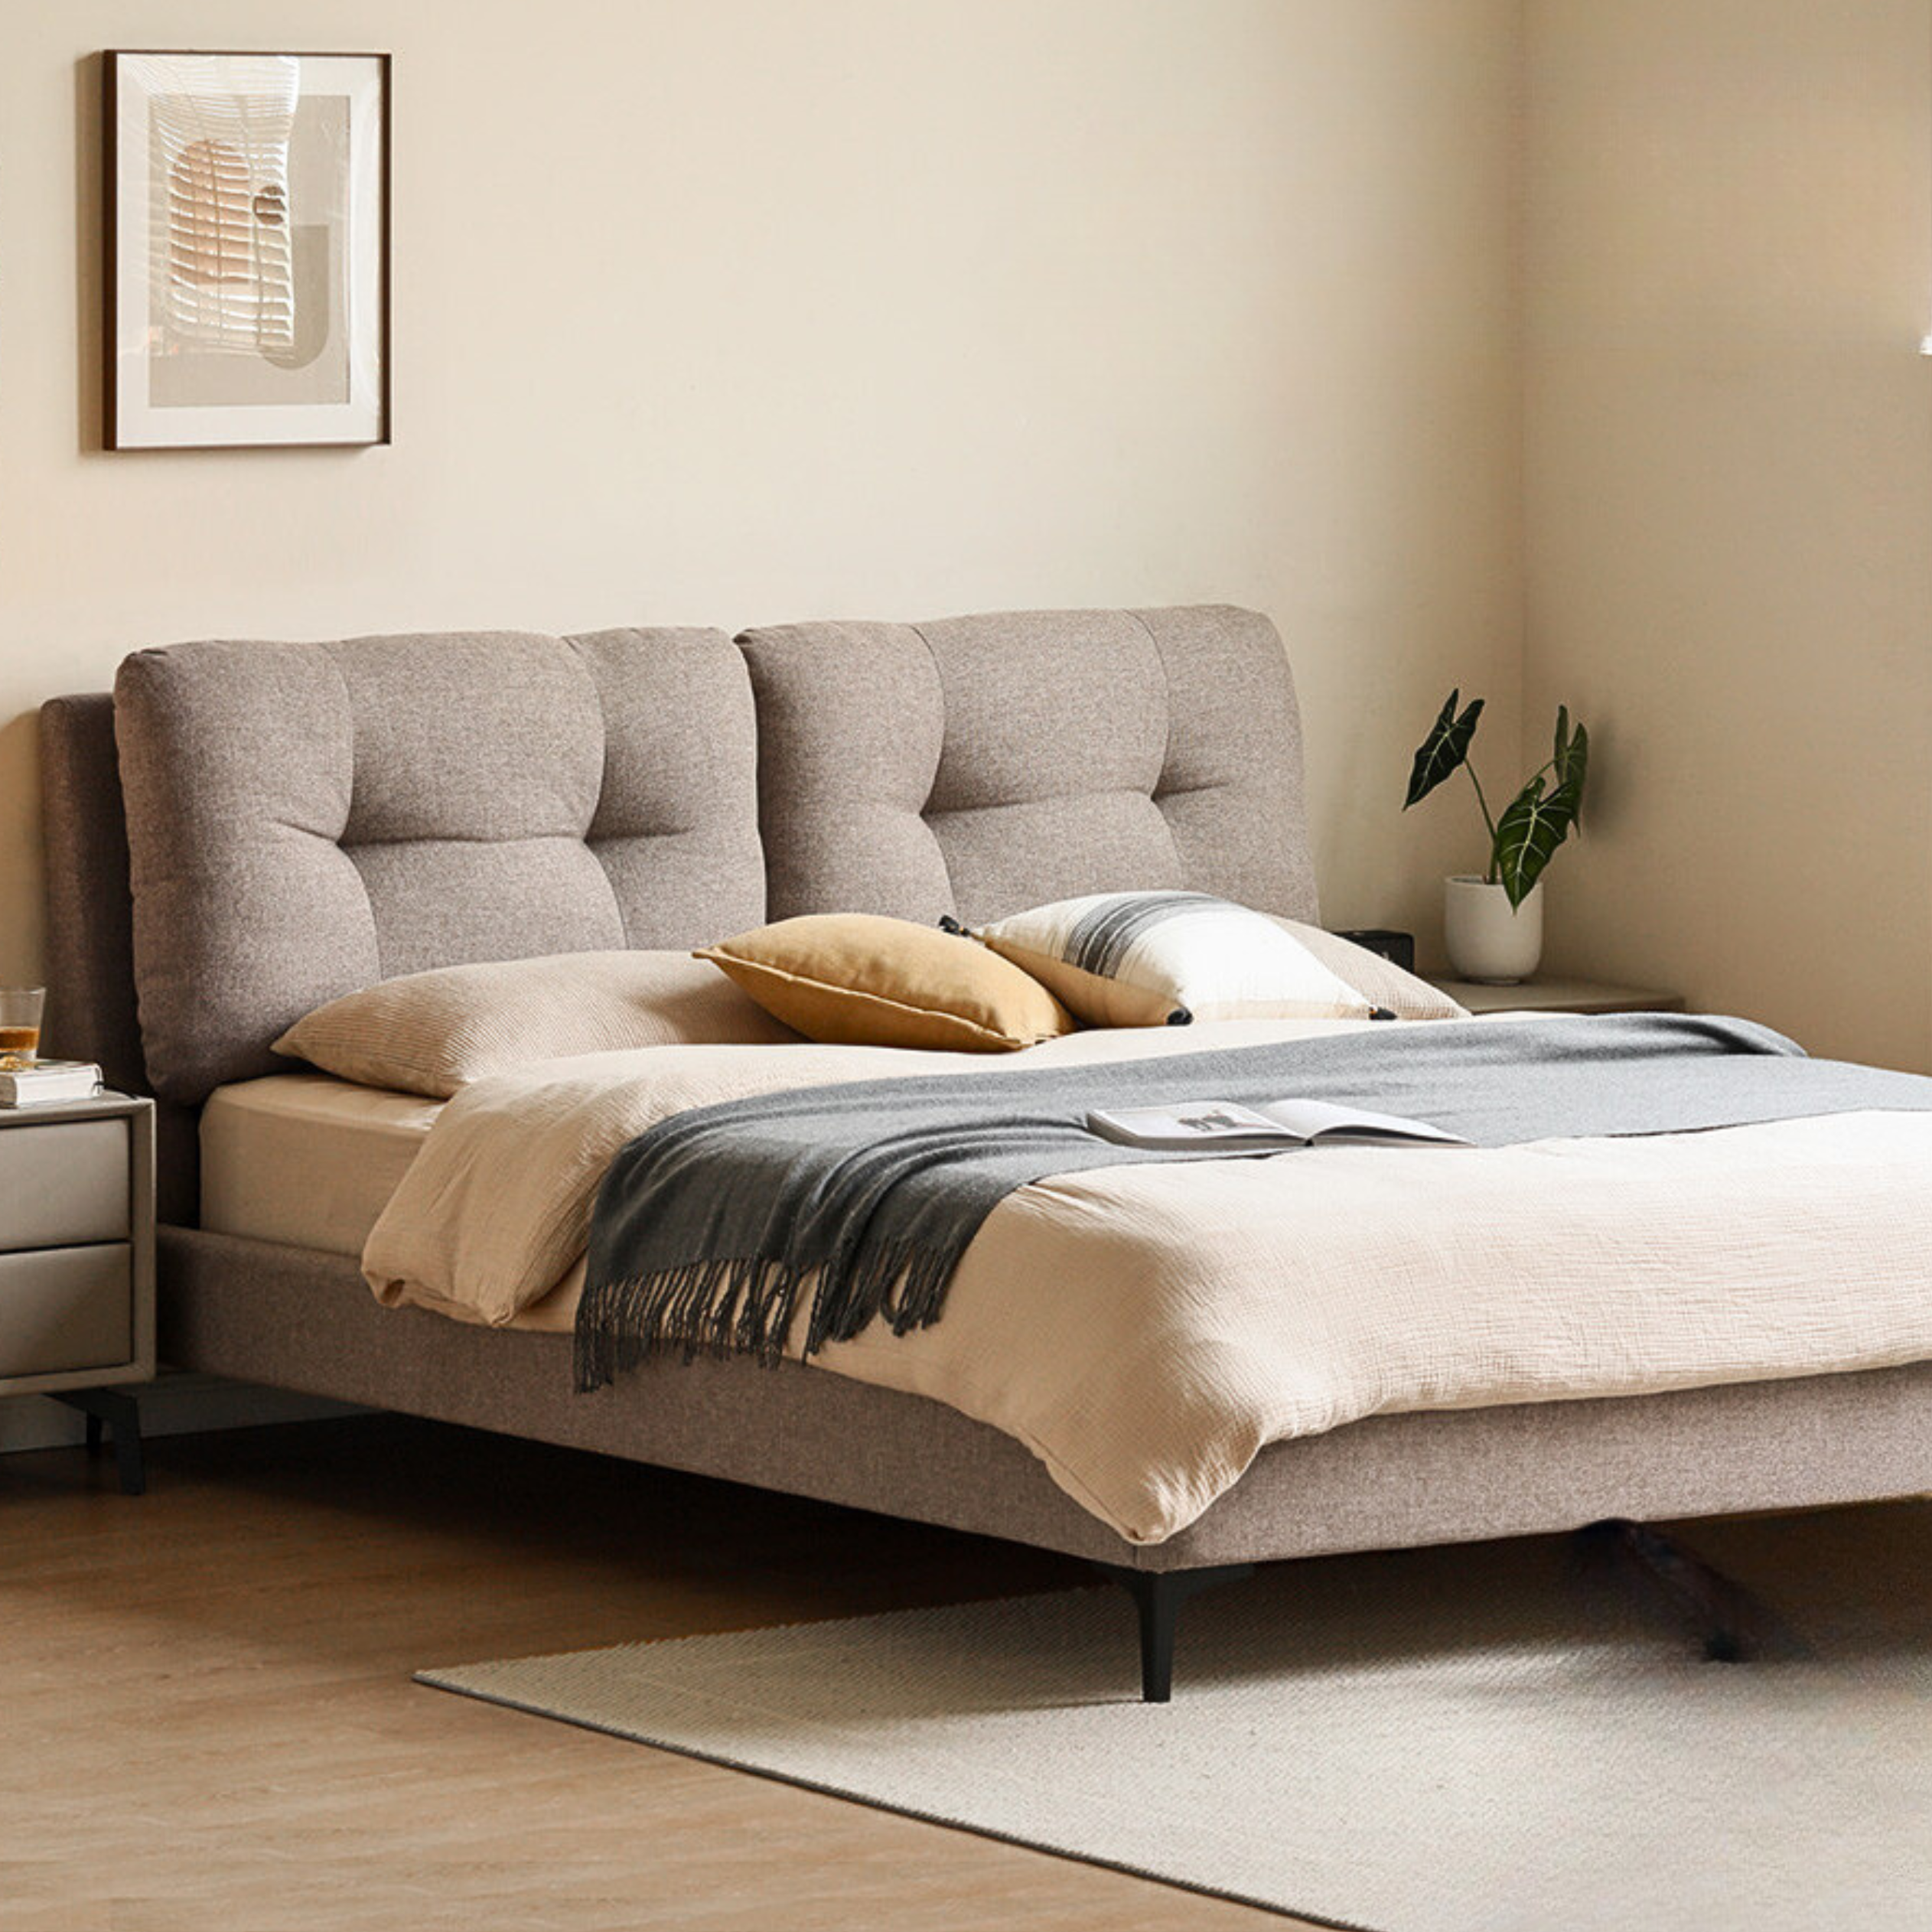 Lightweight luxury fabric bed made of wood"